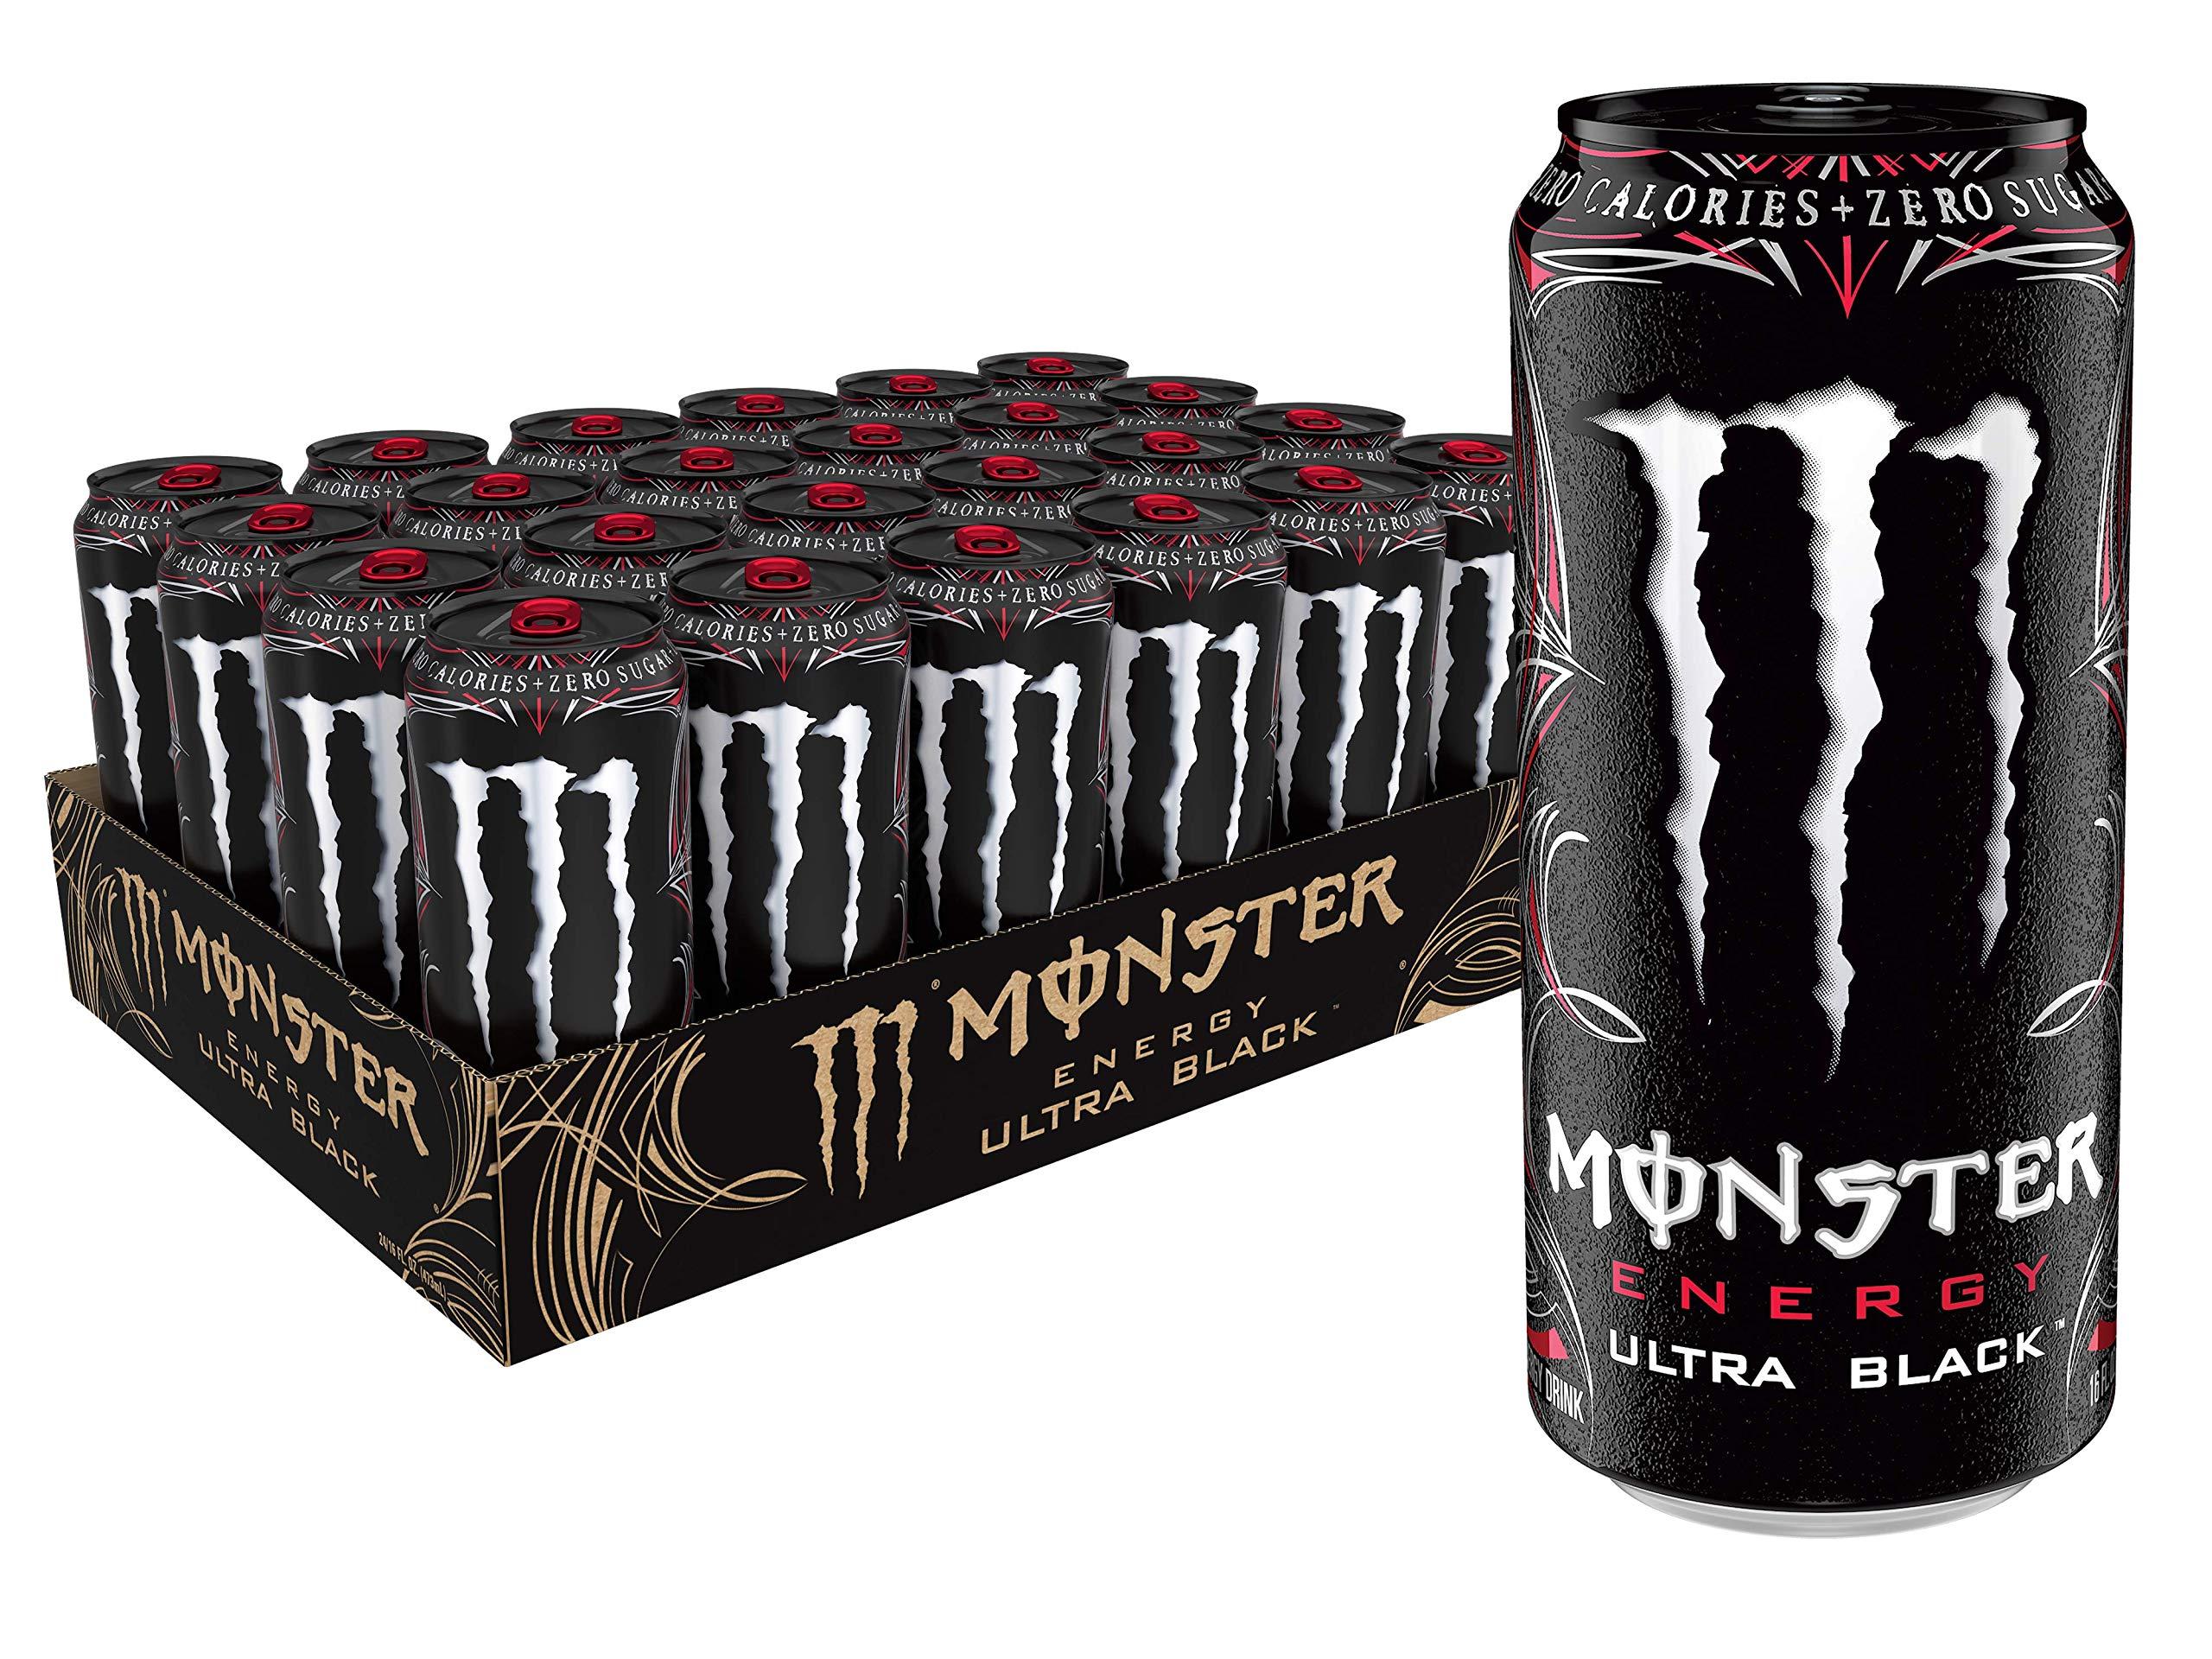 Black and White Monster Logo - Amazon.com : Monster Energy Zero Ultra, Sugar Free Energy Drink, 16 ...